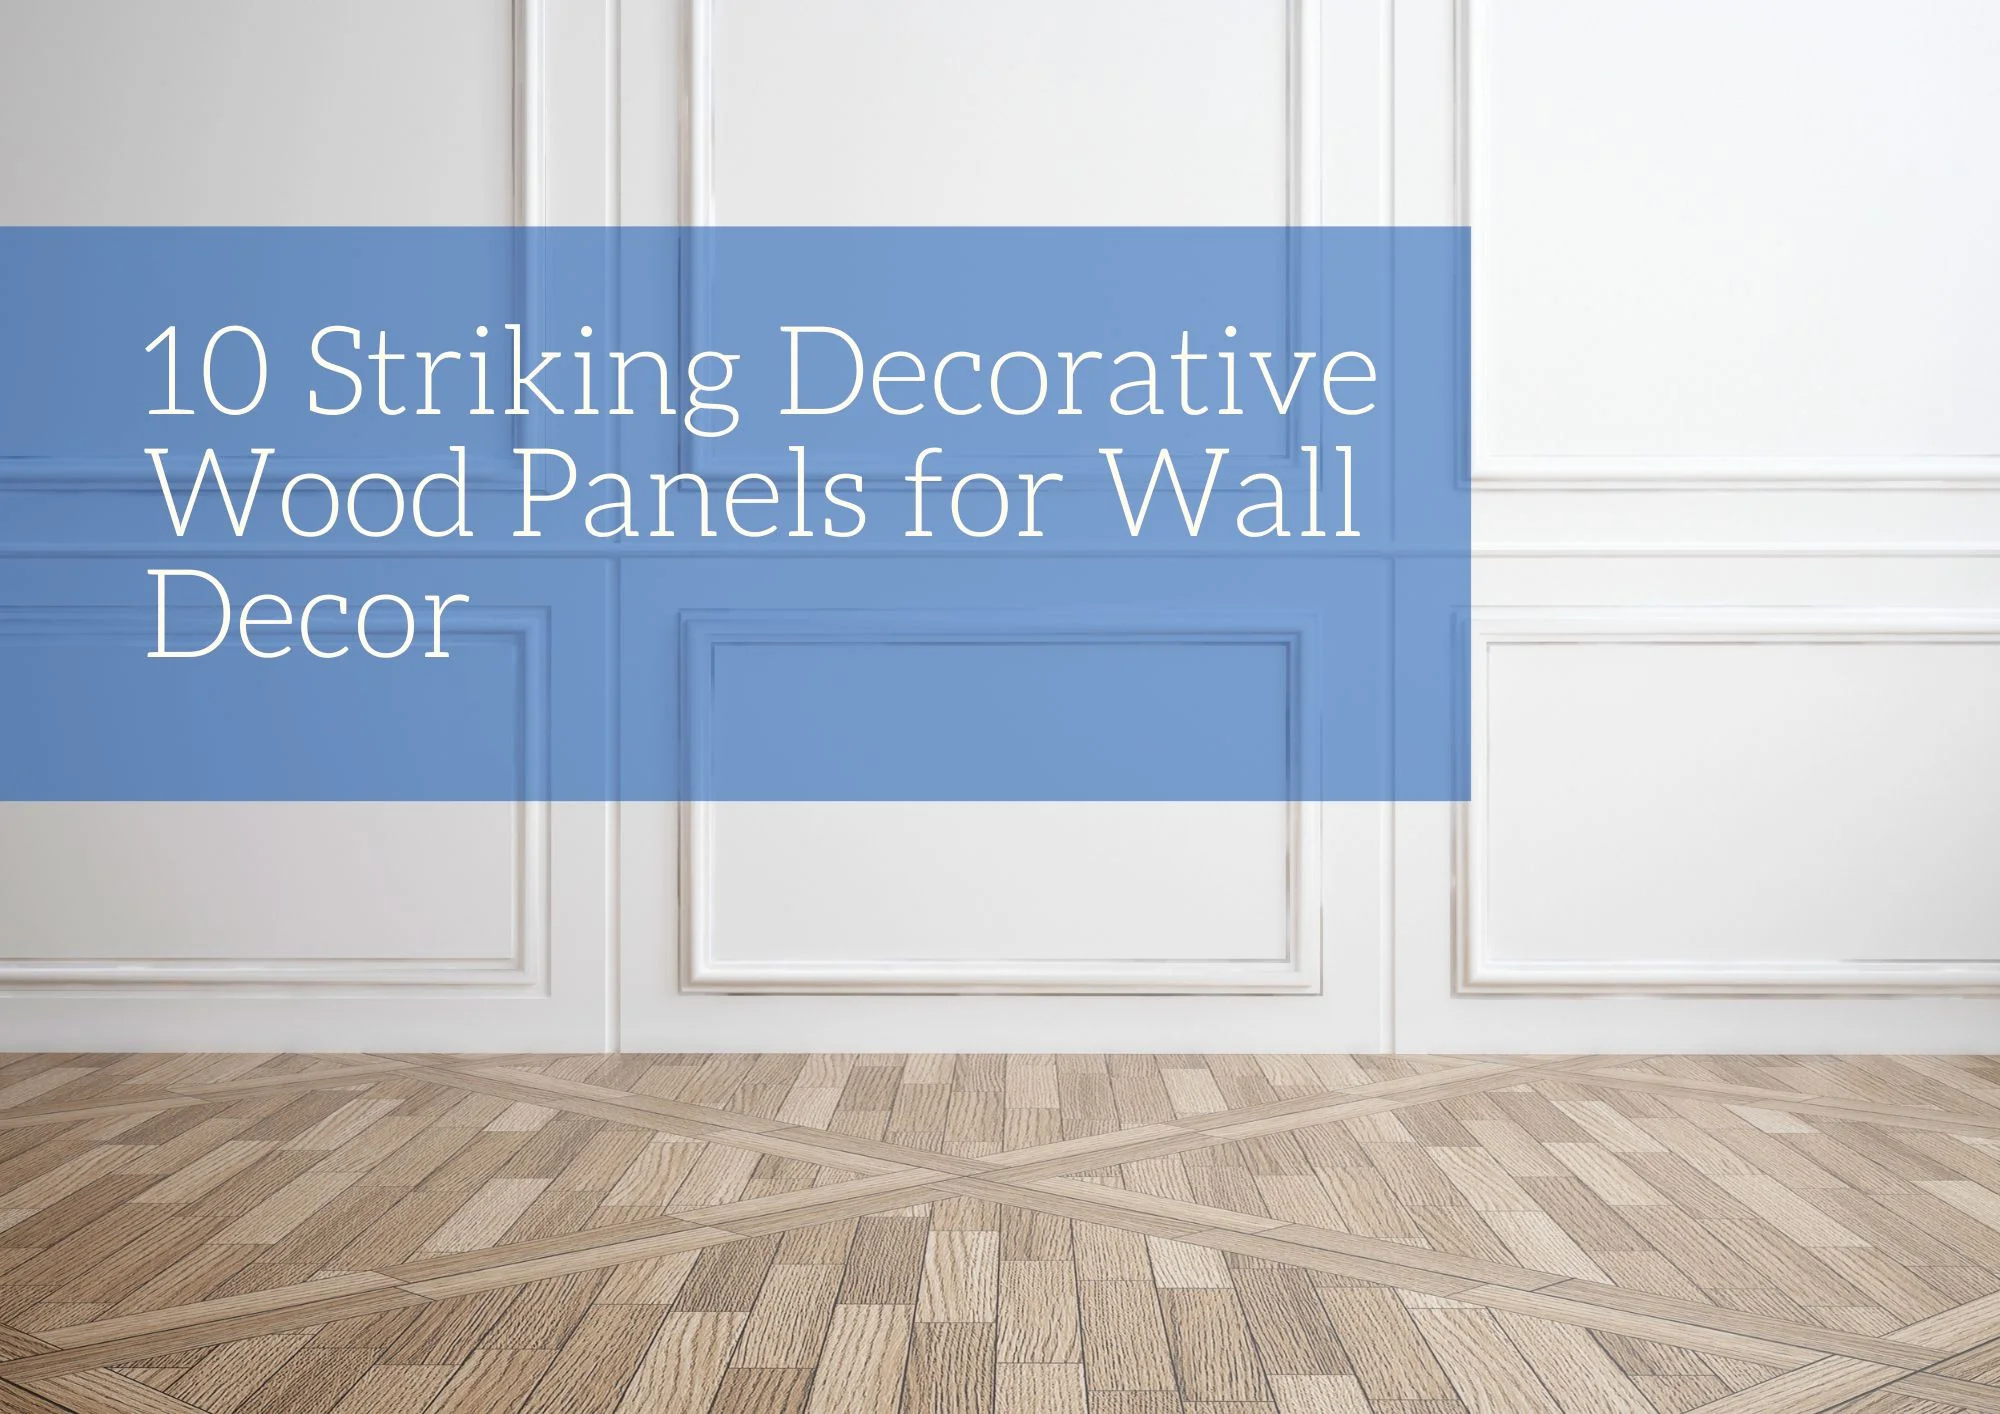 10 Striking Decorative Wood Panels for Wall Decor